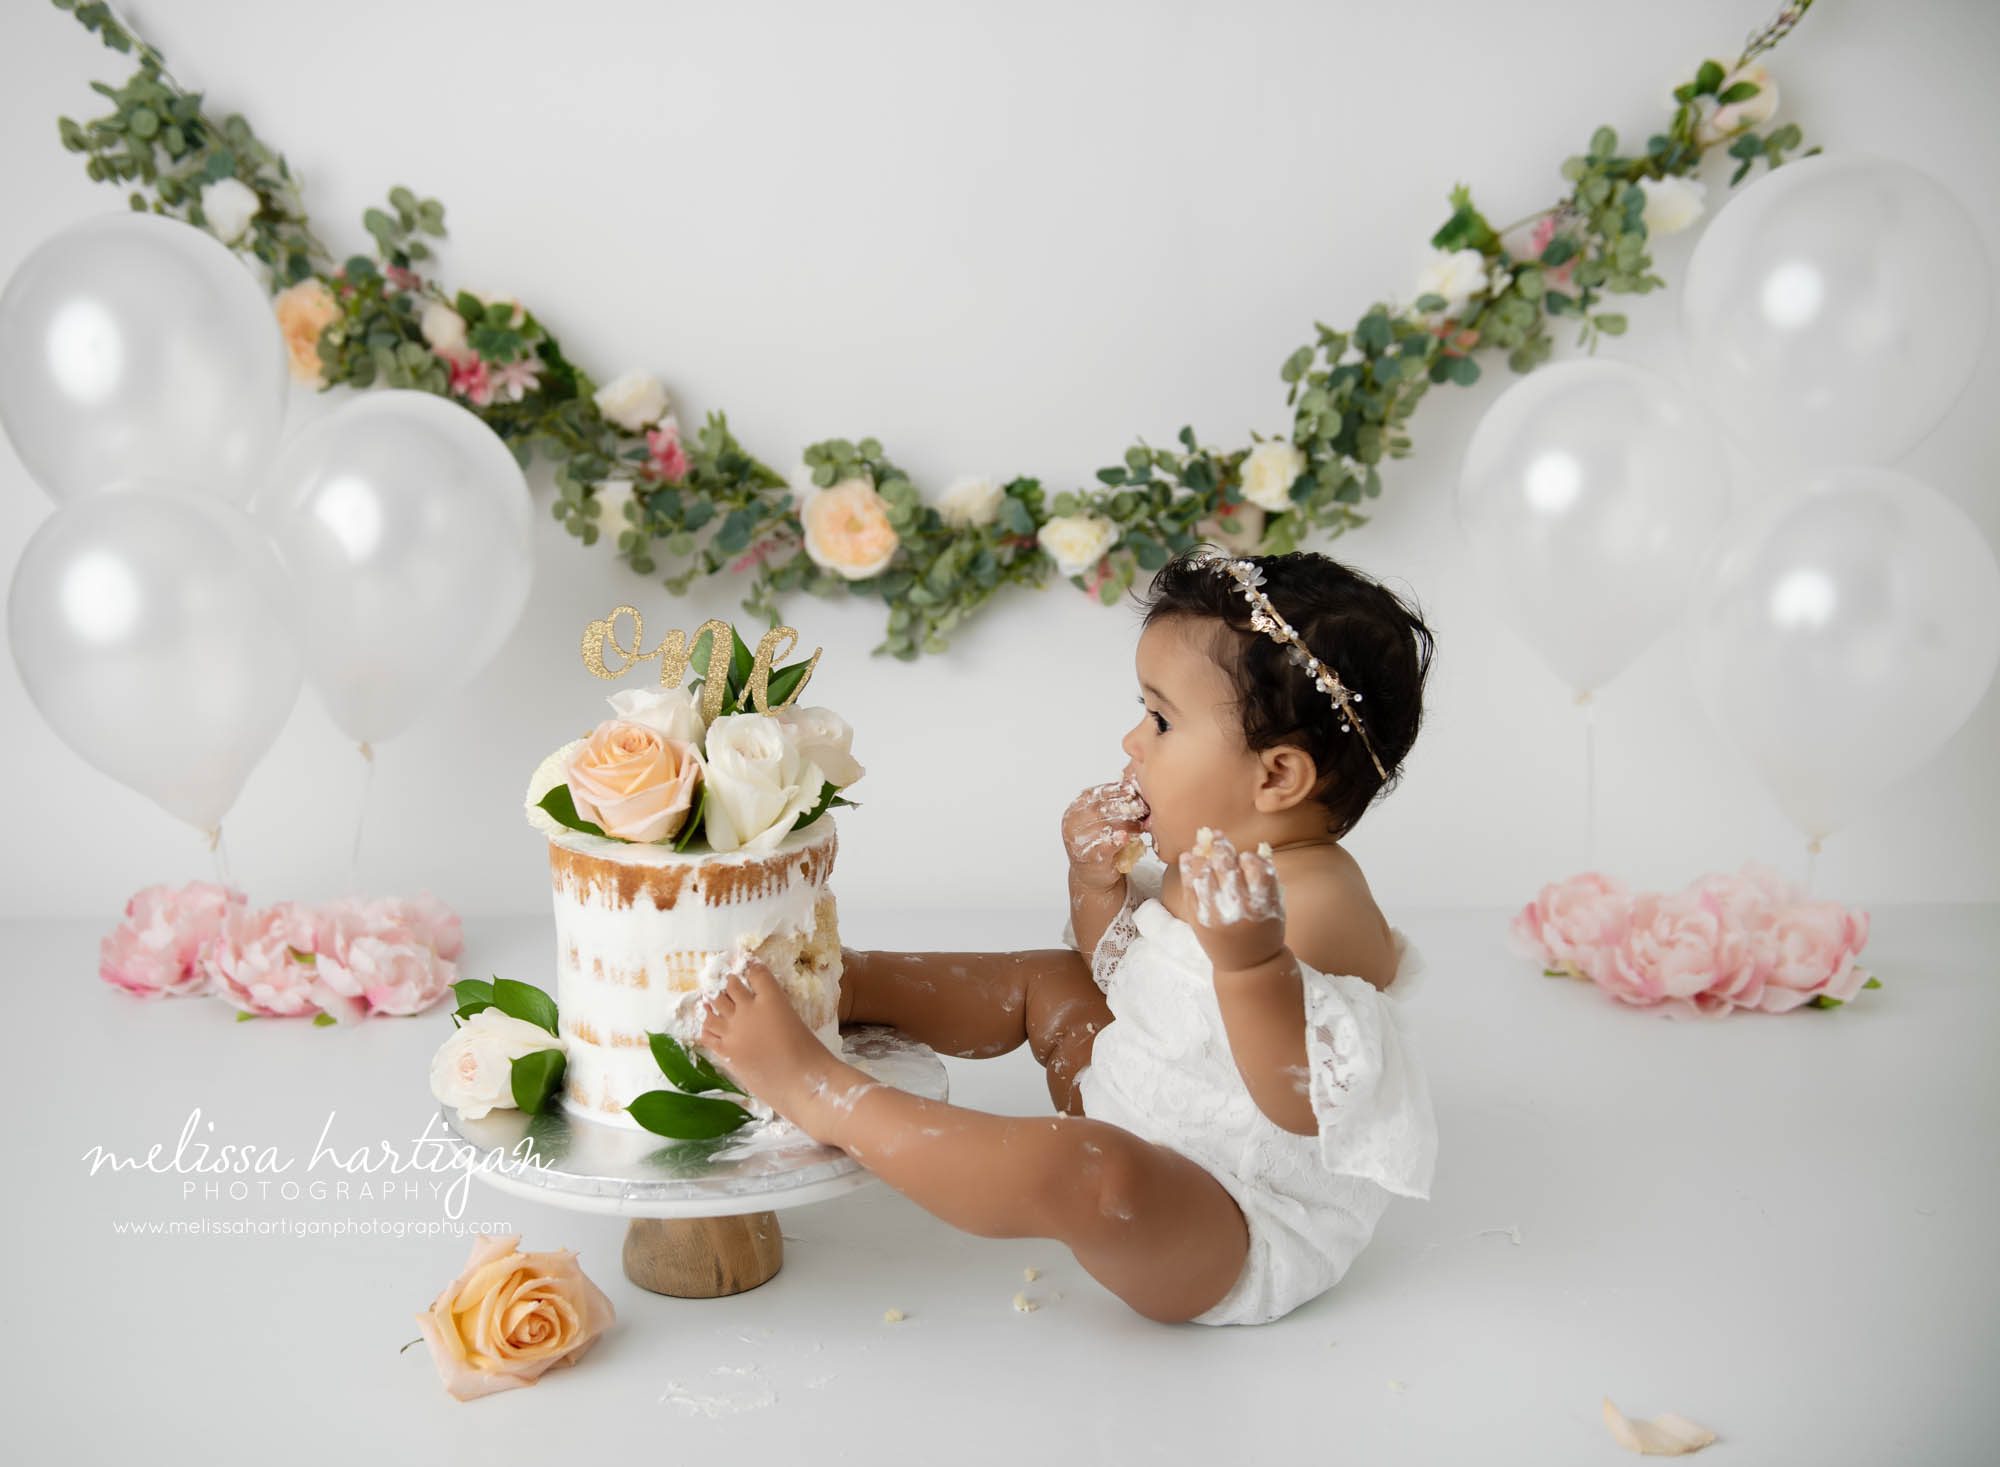 Baby girl eating cake from cake smash birthday cake